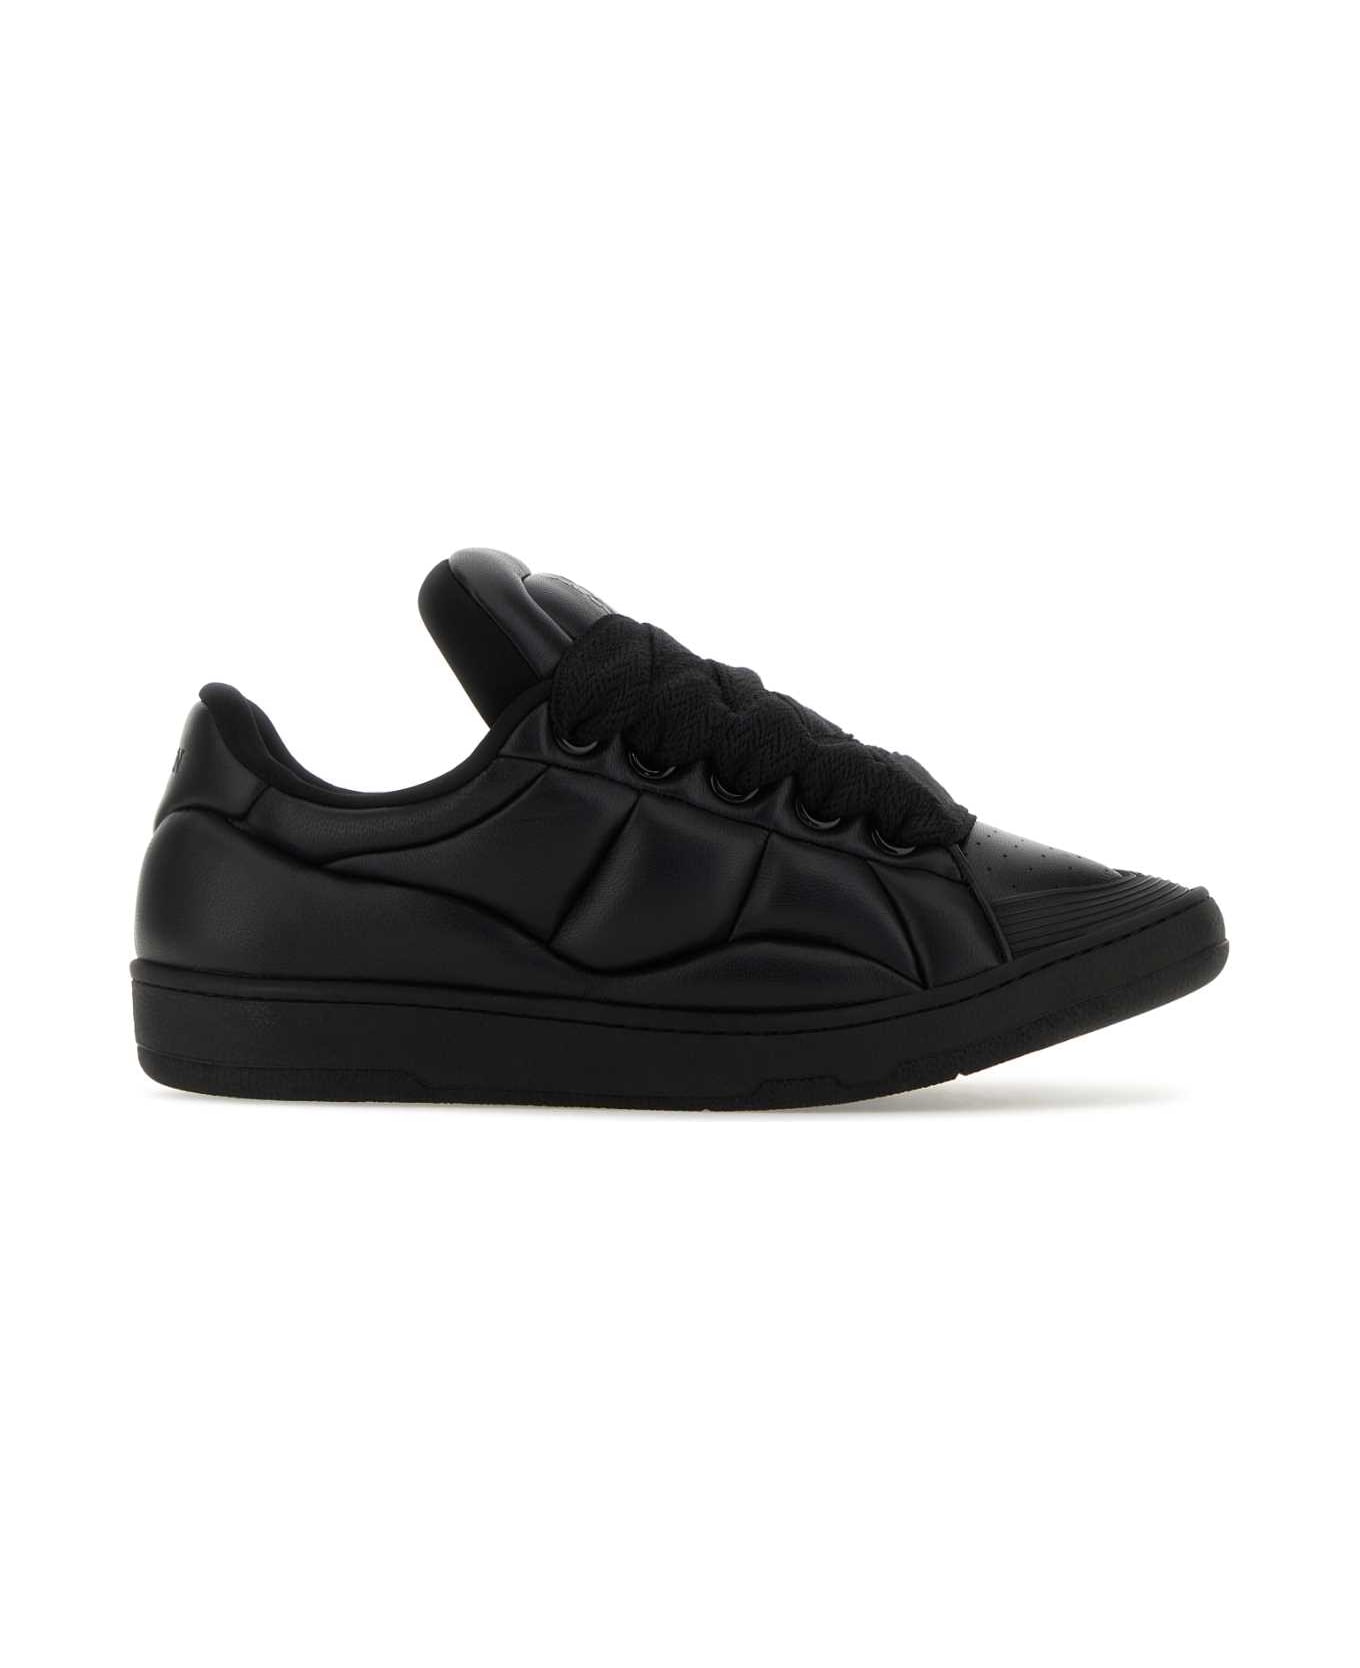 Lanvin Black Leather Curb Xl Sneakers - BLACKBLACK